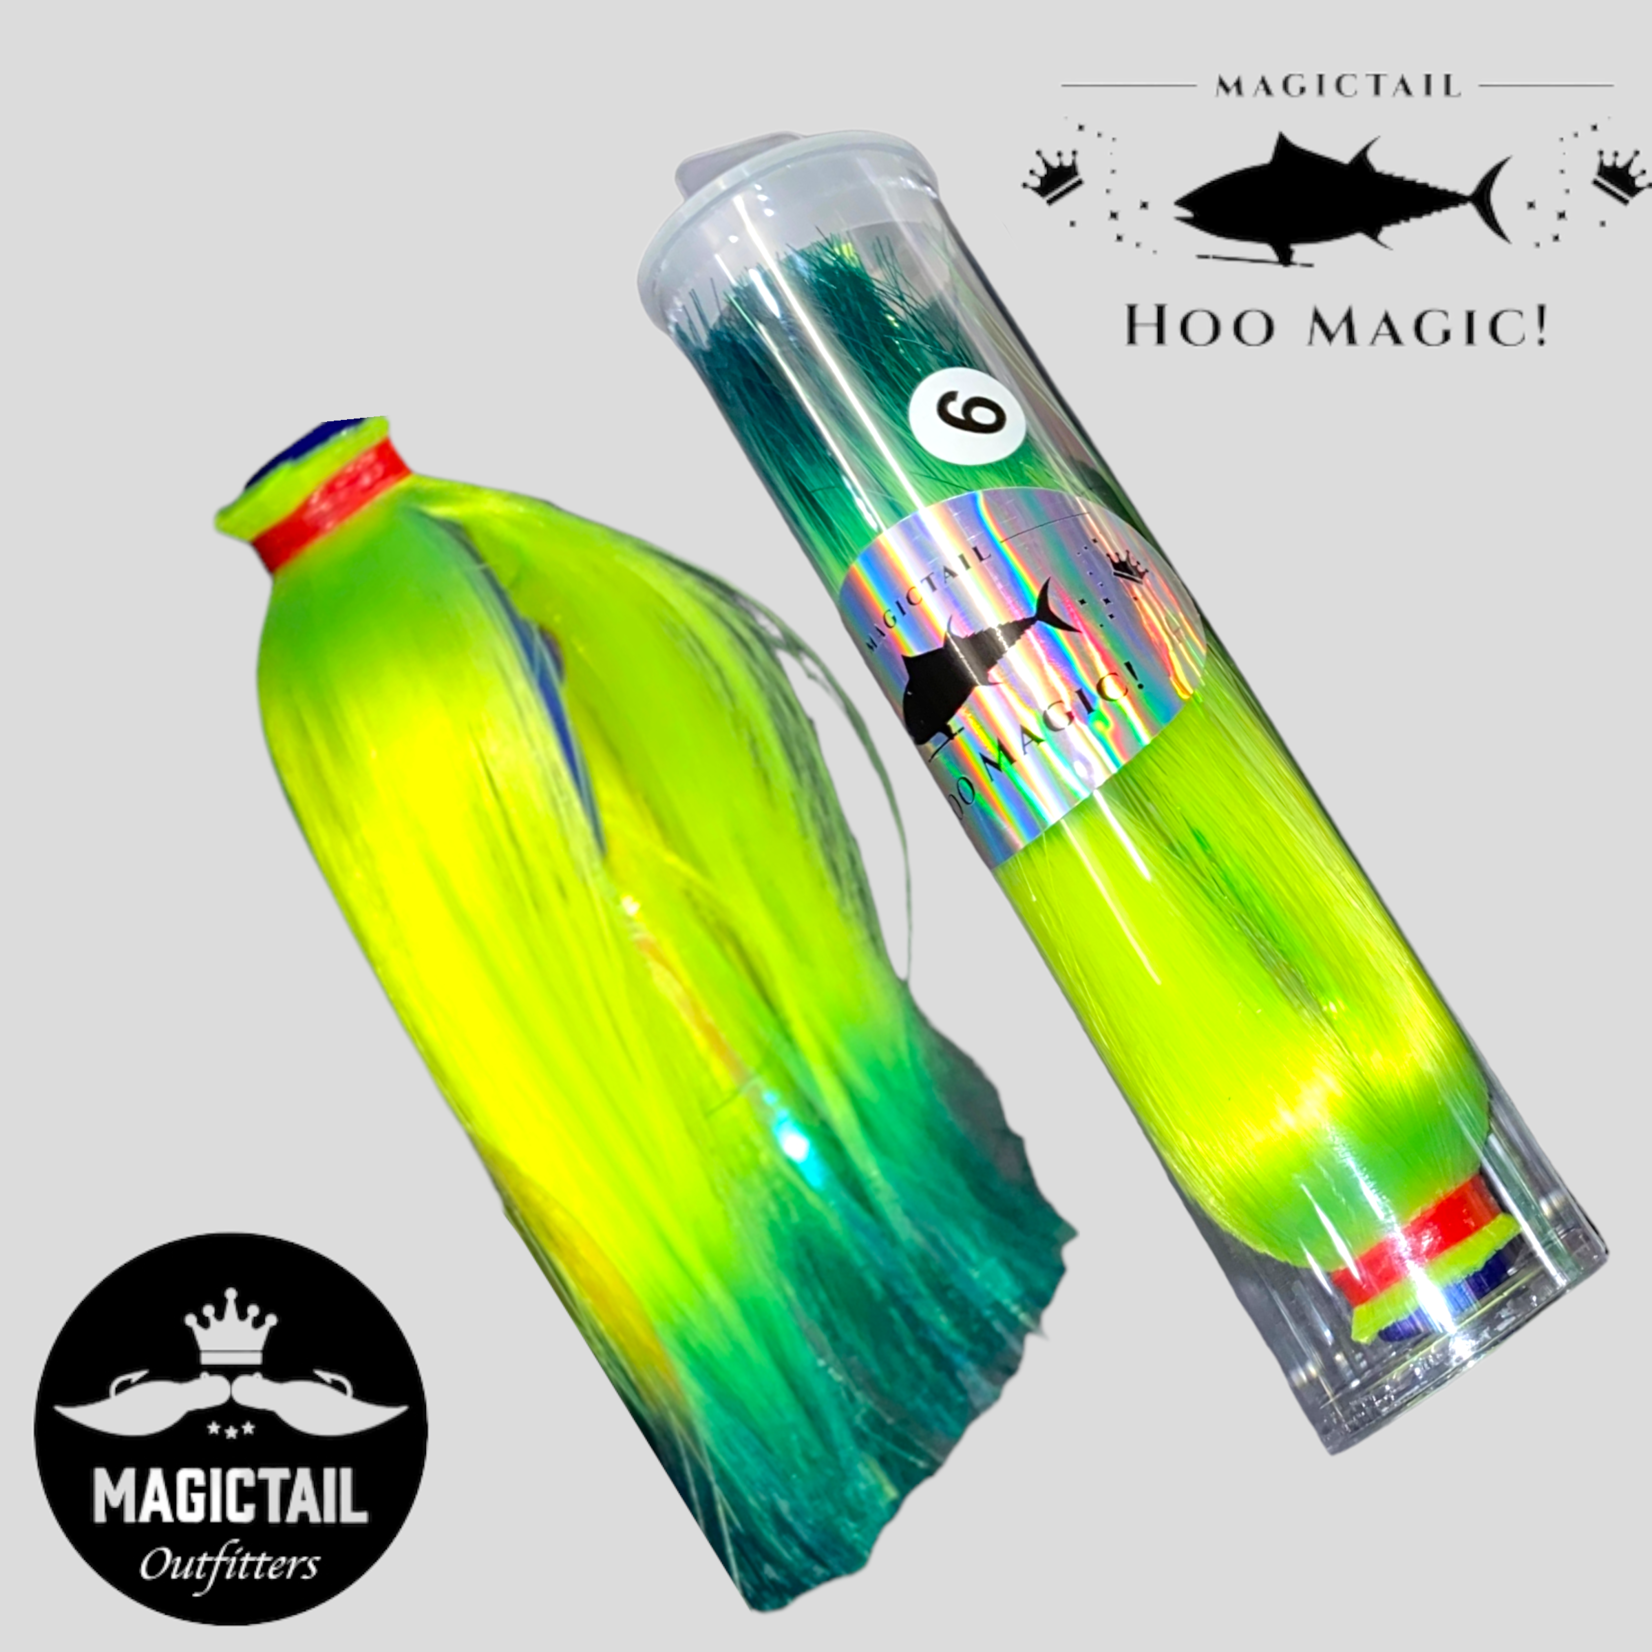 Magic Tail Magictail Hoo Magic 6